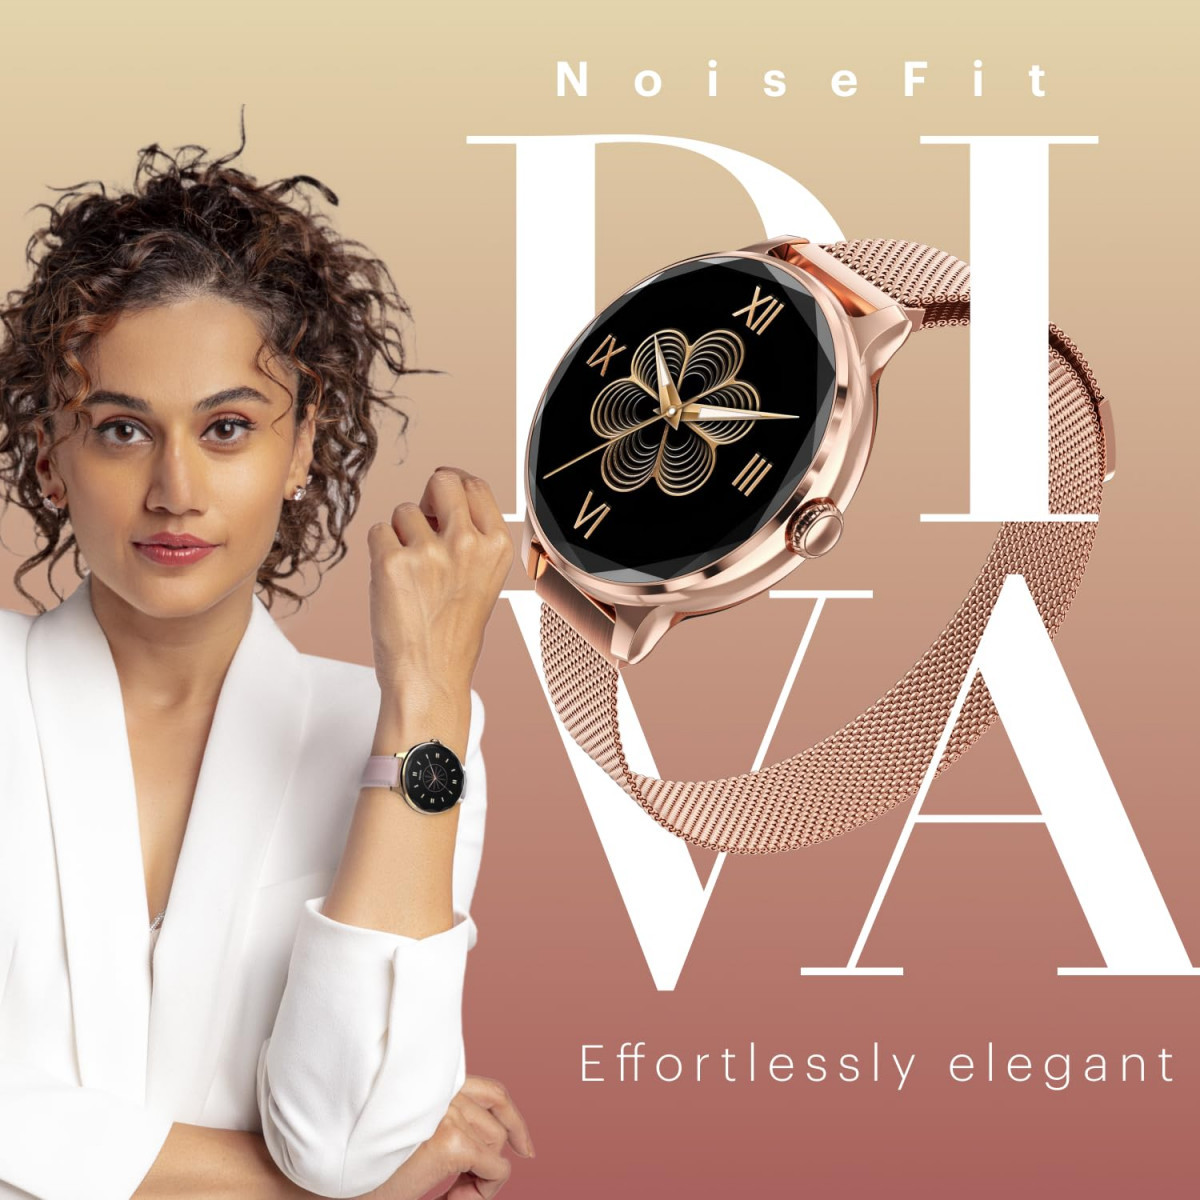 Noise Diva Smartwatch with Diamond Cut dial Glossy Metallic Finish